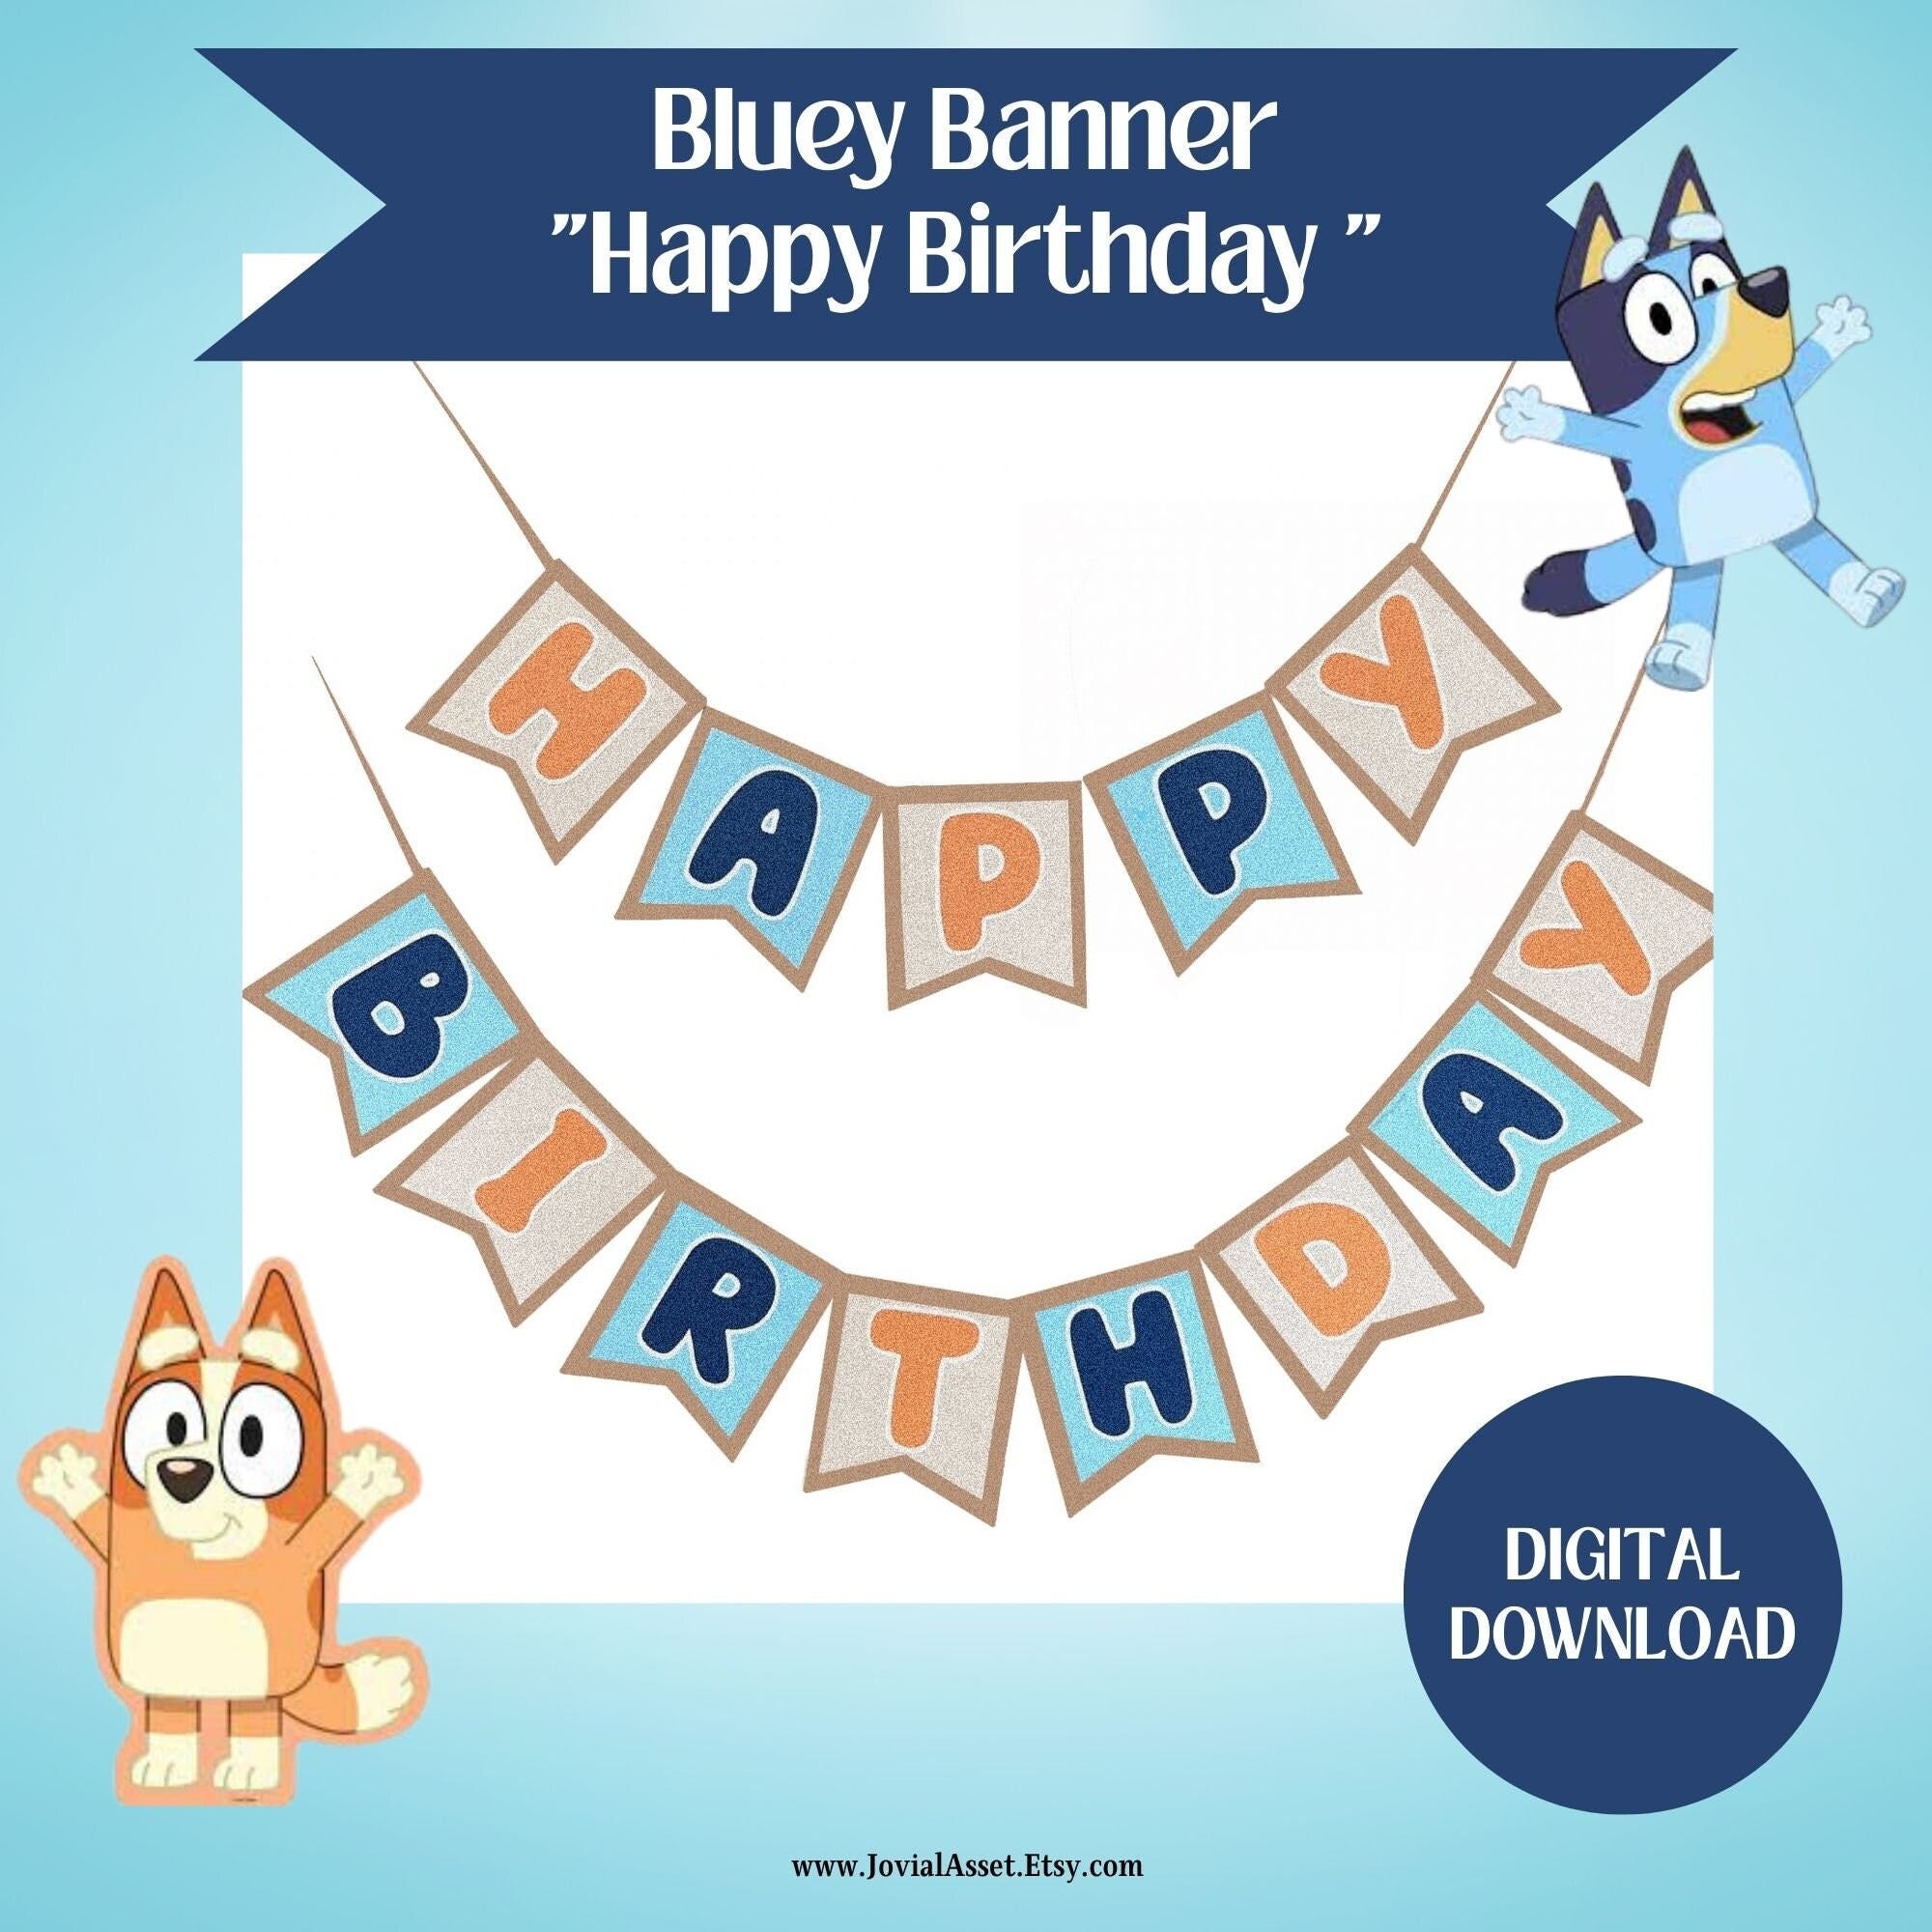 Bluey Birthday Banner Birthday Decorations Bluey Birthday Happy Birthday Banner Bluey Happy Birthday Banner Wall Hanging Birthday Banner Art